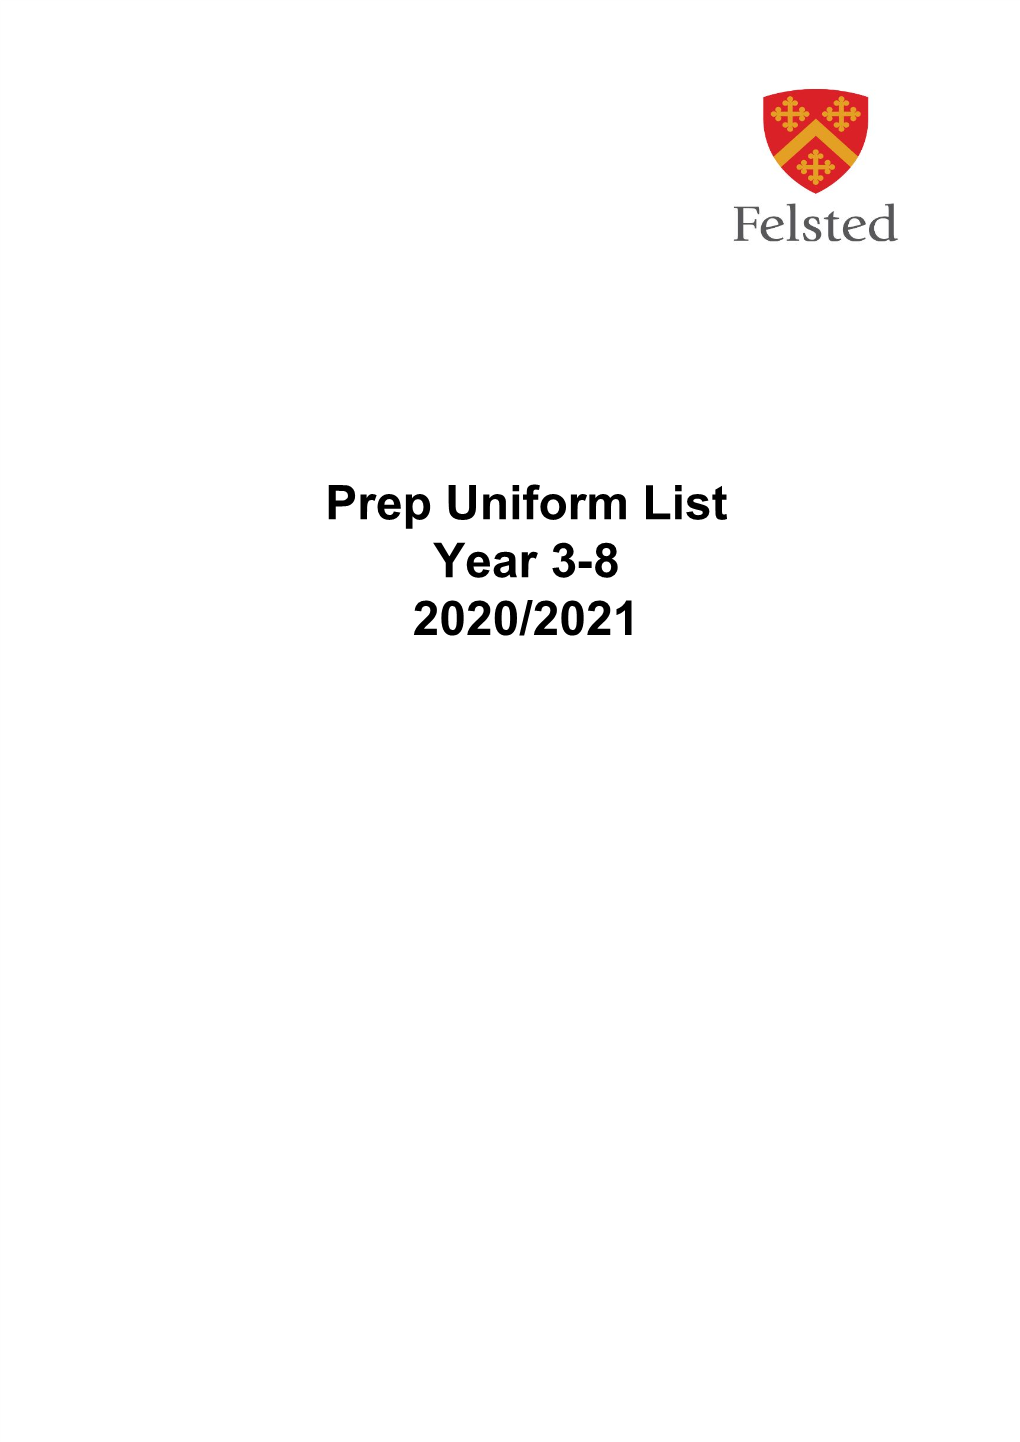 Prep Uniform List Year 3-8 2020/2021